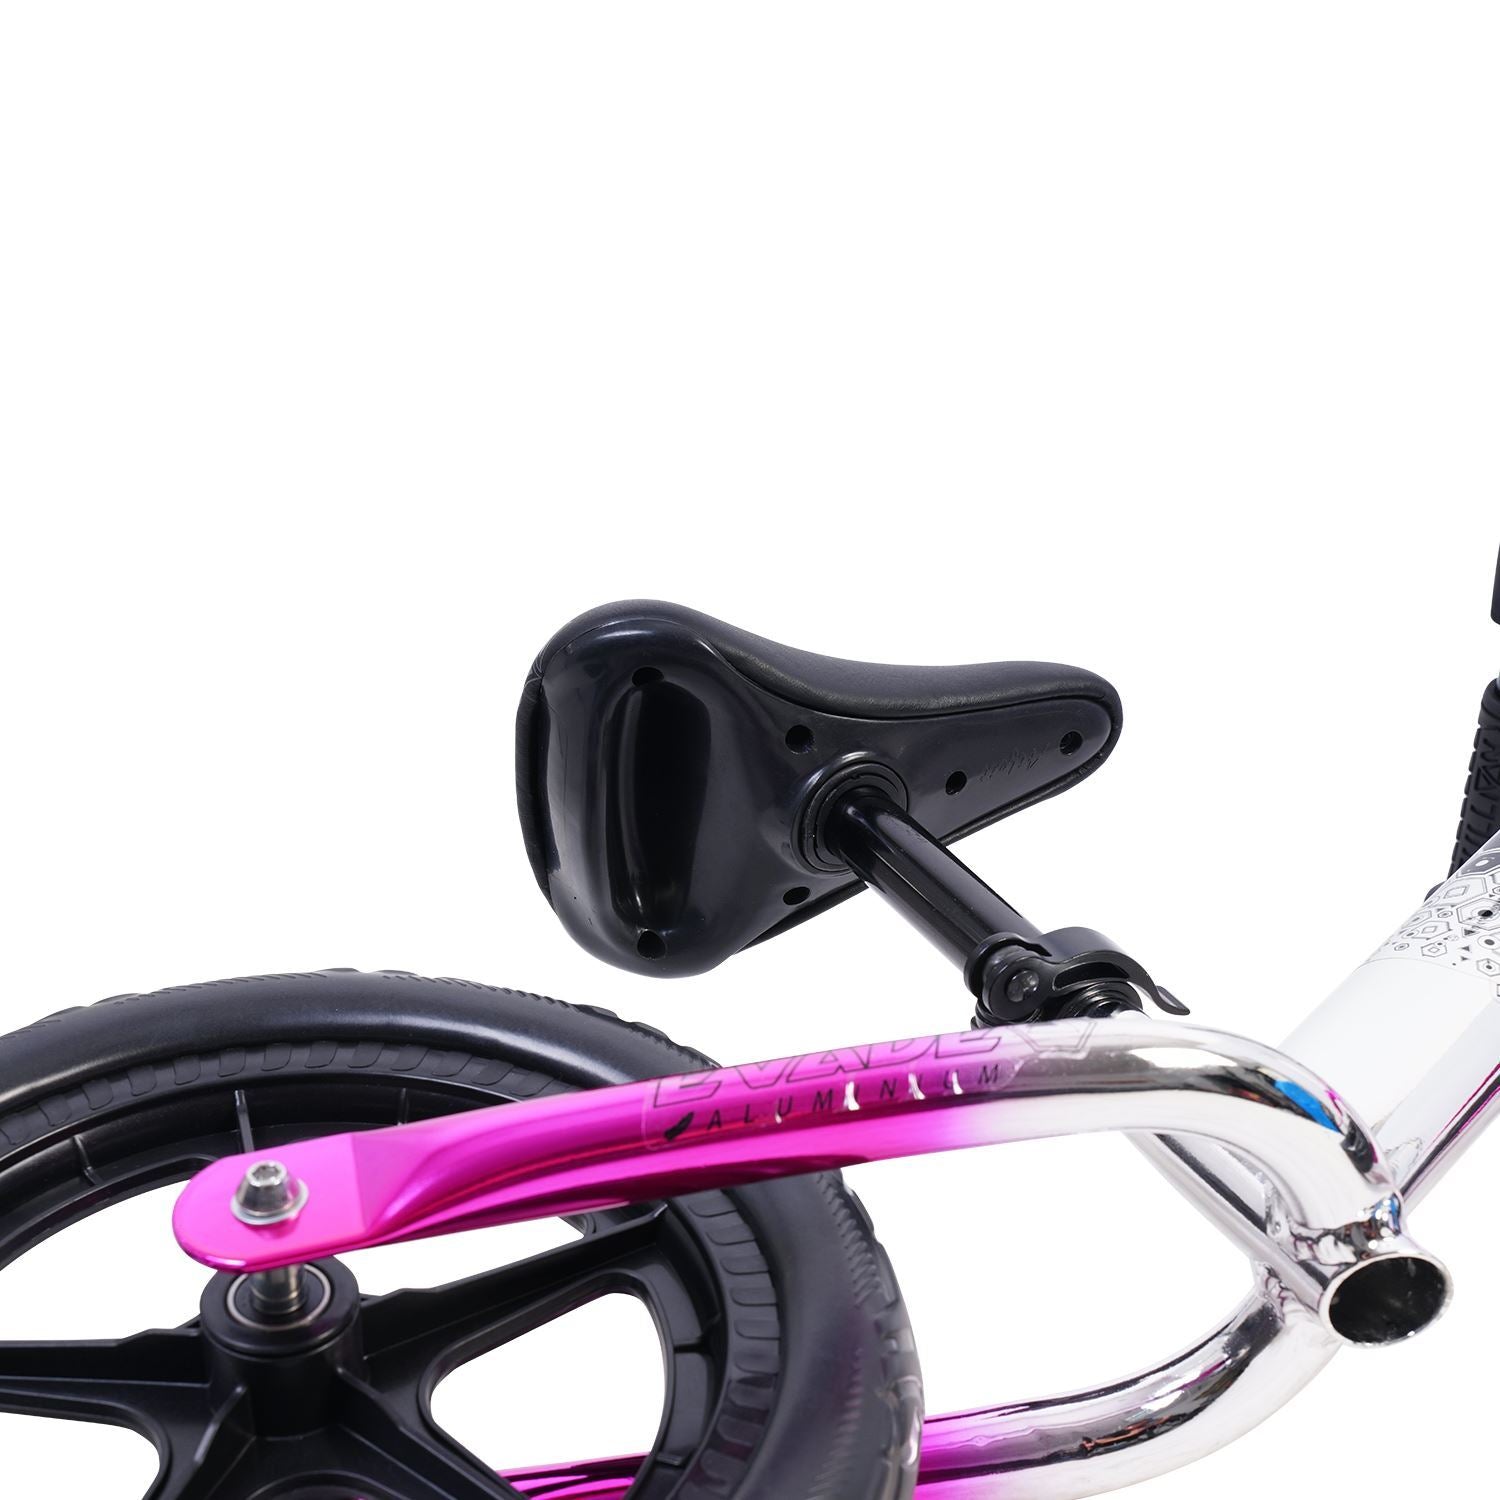 Sullivan Evade 12in - Balance Bike Pink Black Silver Tube Close Up